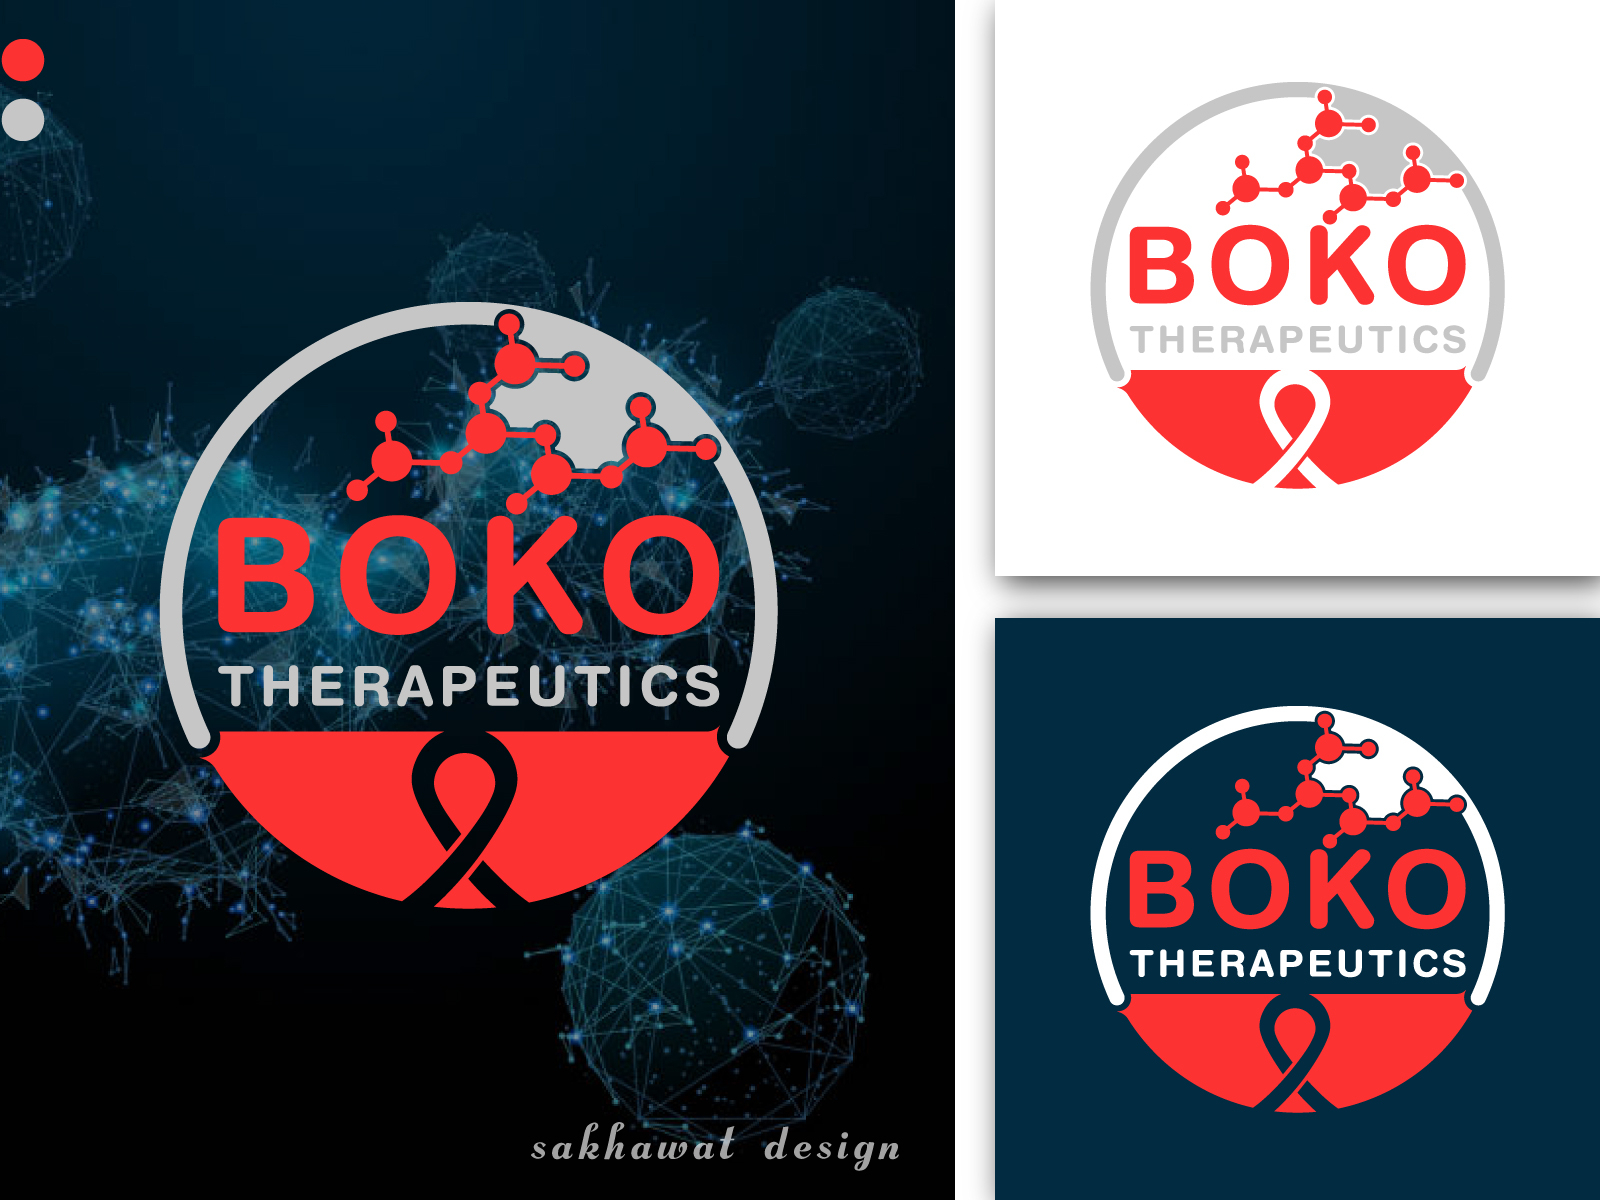 Boko Therapeutics 4x 